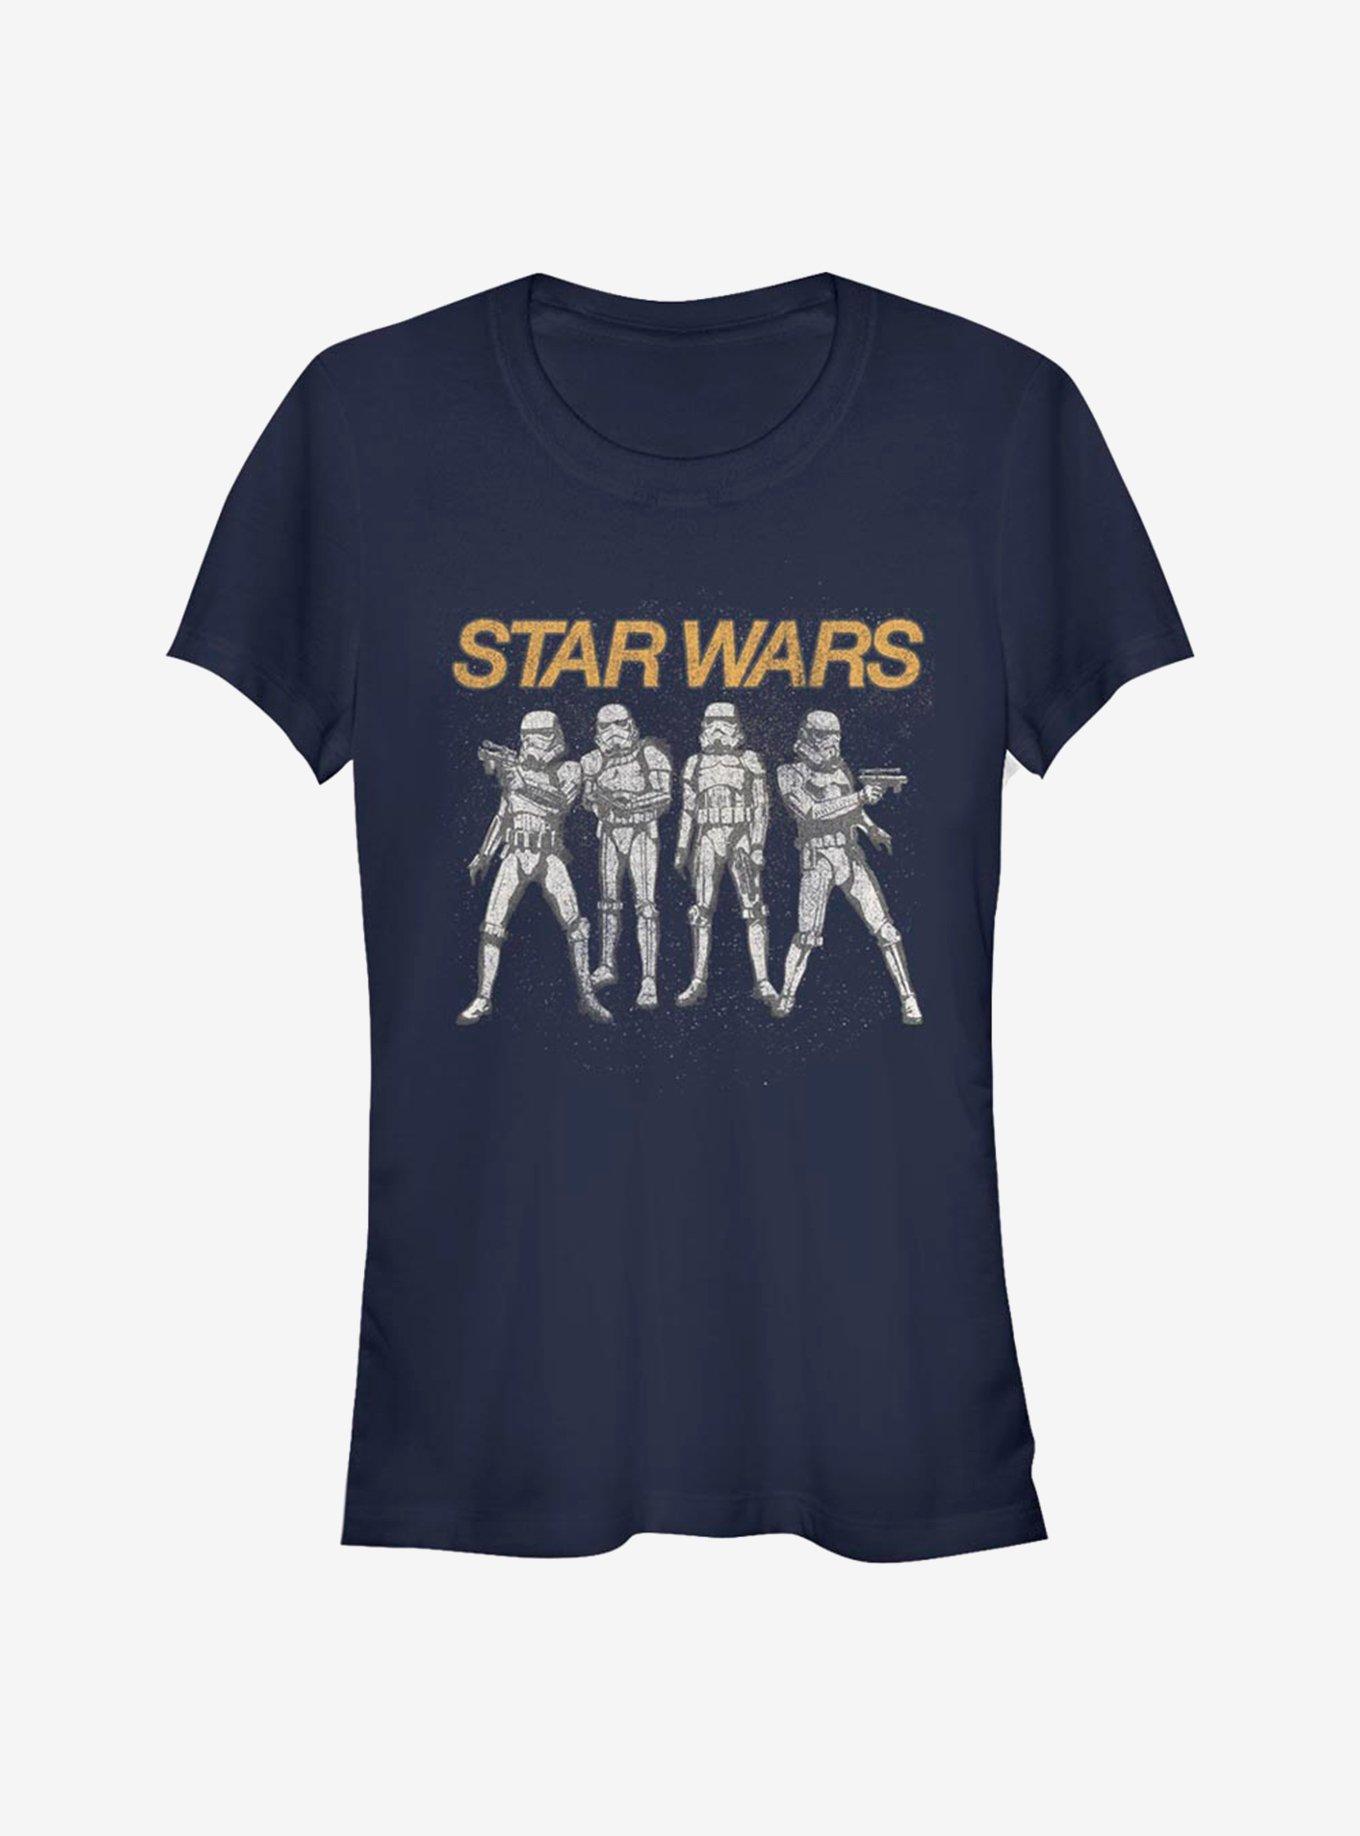 Star Wars Trooper Line Up Girls T-Shirt